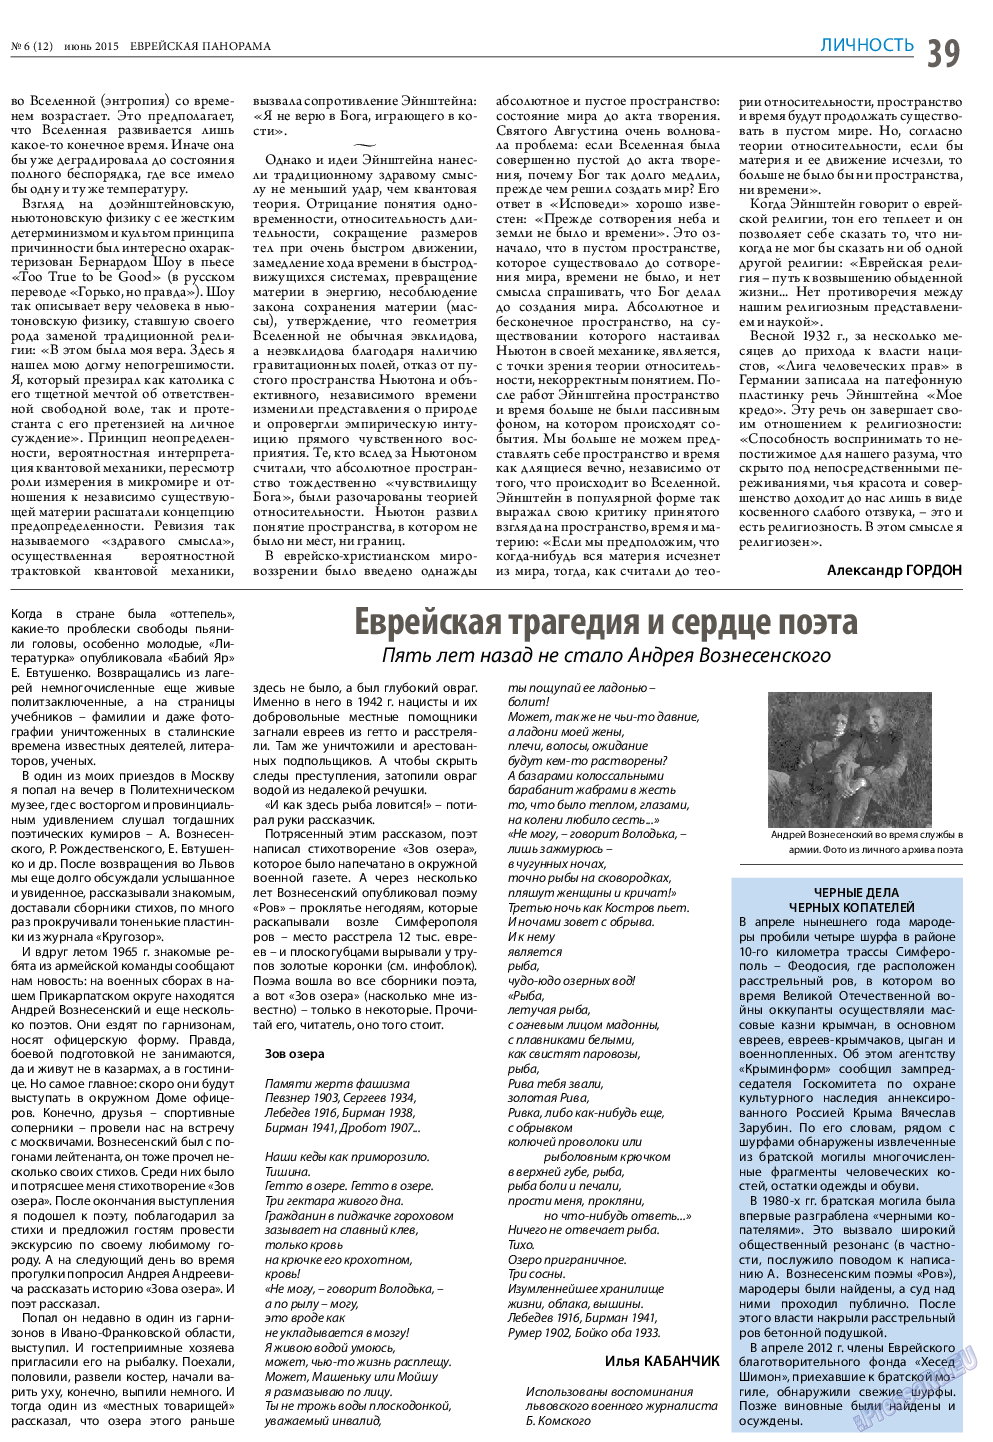 Еврейская панорама, газета. 2015 №6 стр.39